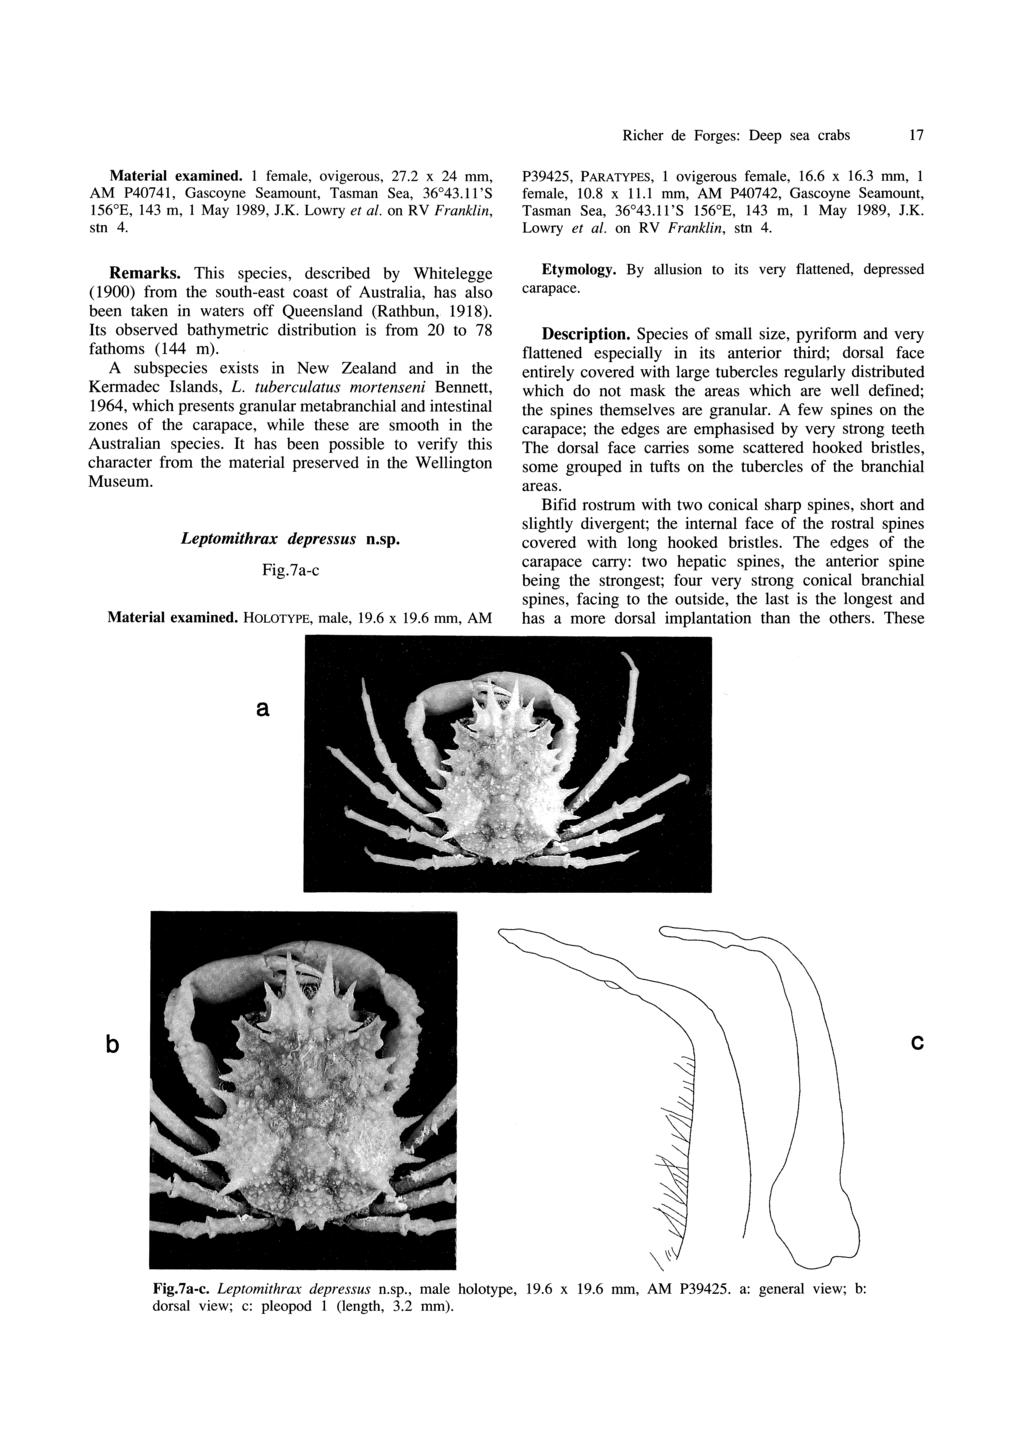 Richer de Forges: Deep sea crabs 17 Material examined. 1 female, ovigerous, 27.2 x 24 mm, AM P40741, Gascoyne Seamount, Tasman Sea, 36 43.11'S 156 E, 143 m, 1 May 1989, I.K. Lowry et al.